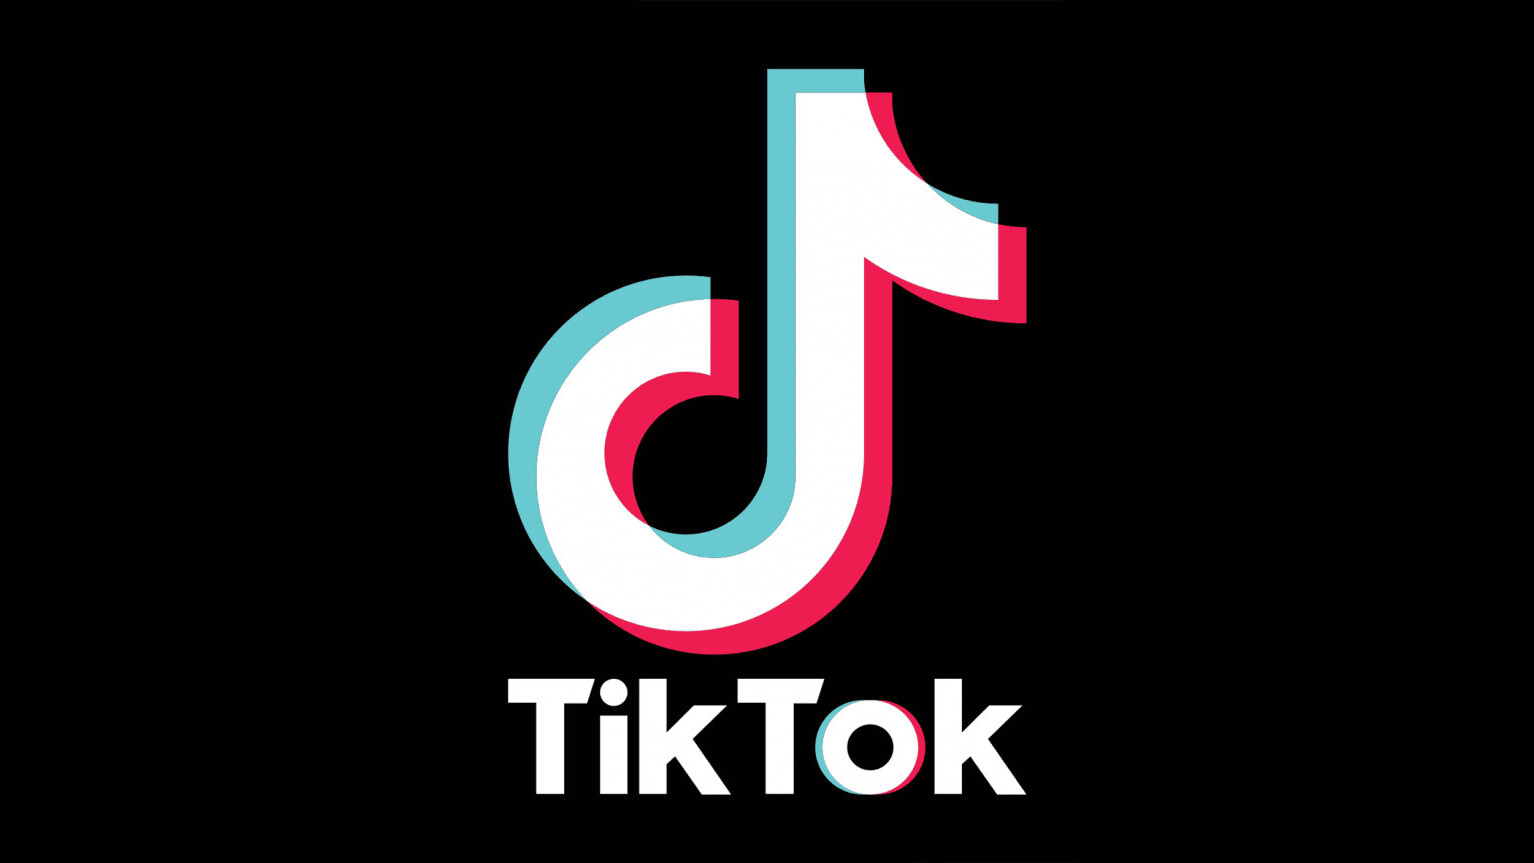 TikTok fights back against ISIS propaganda